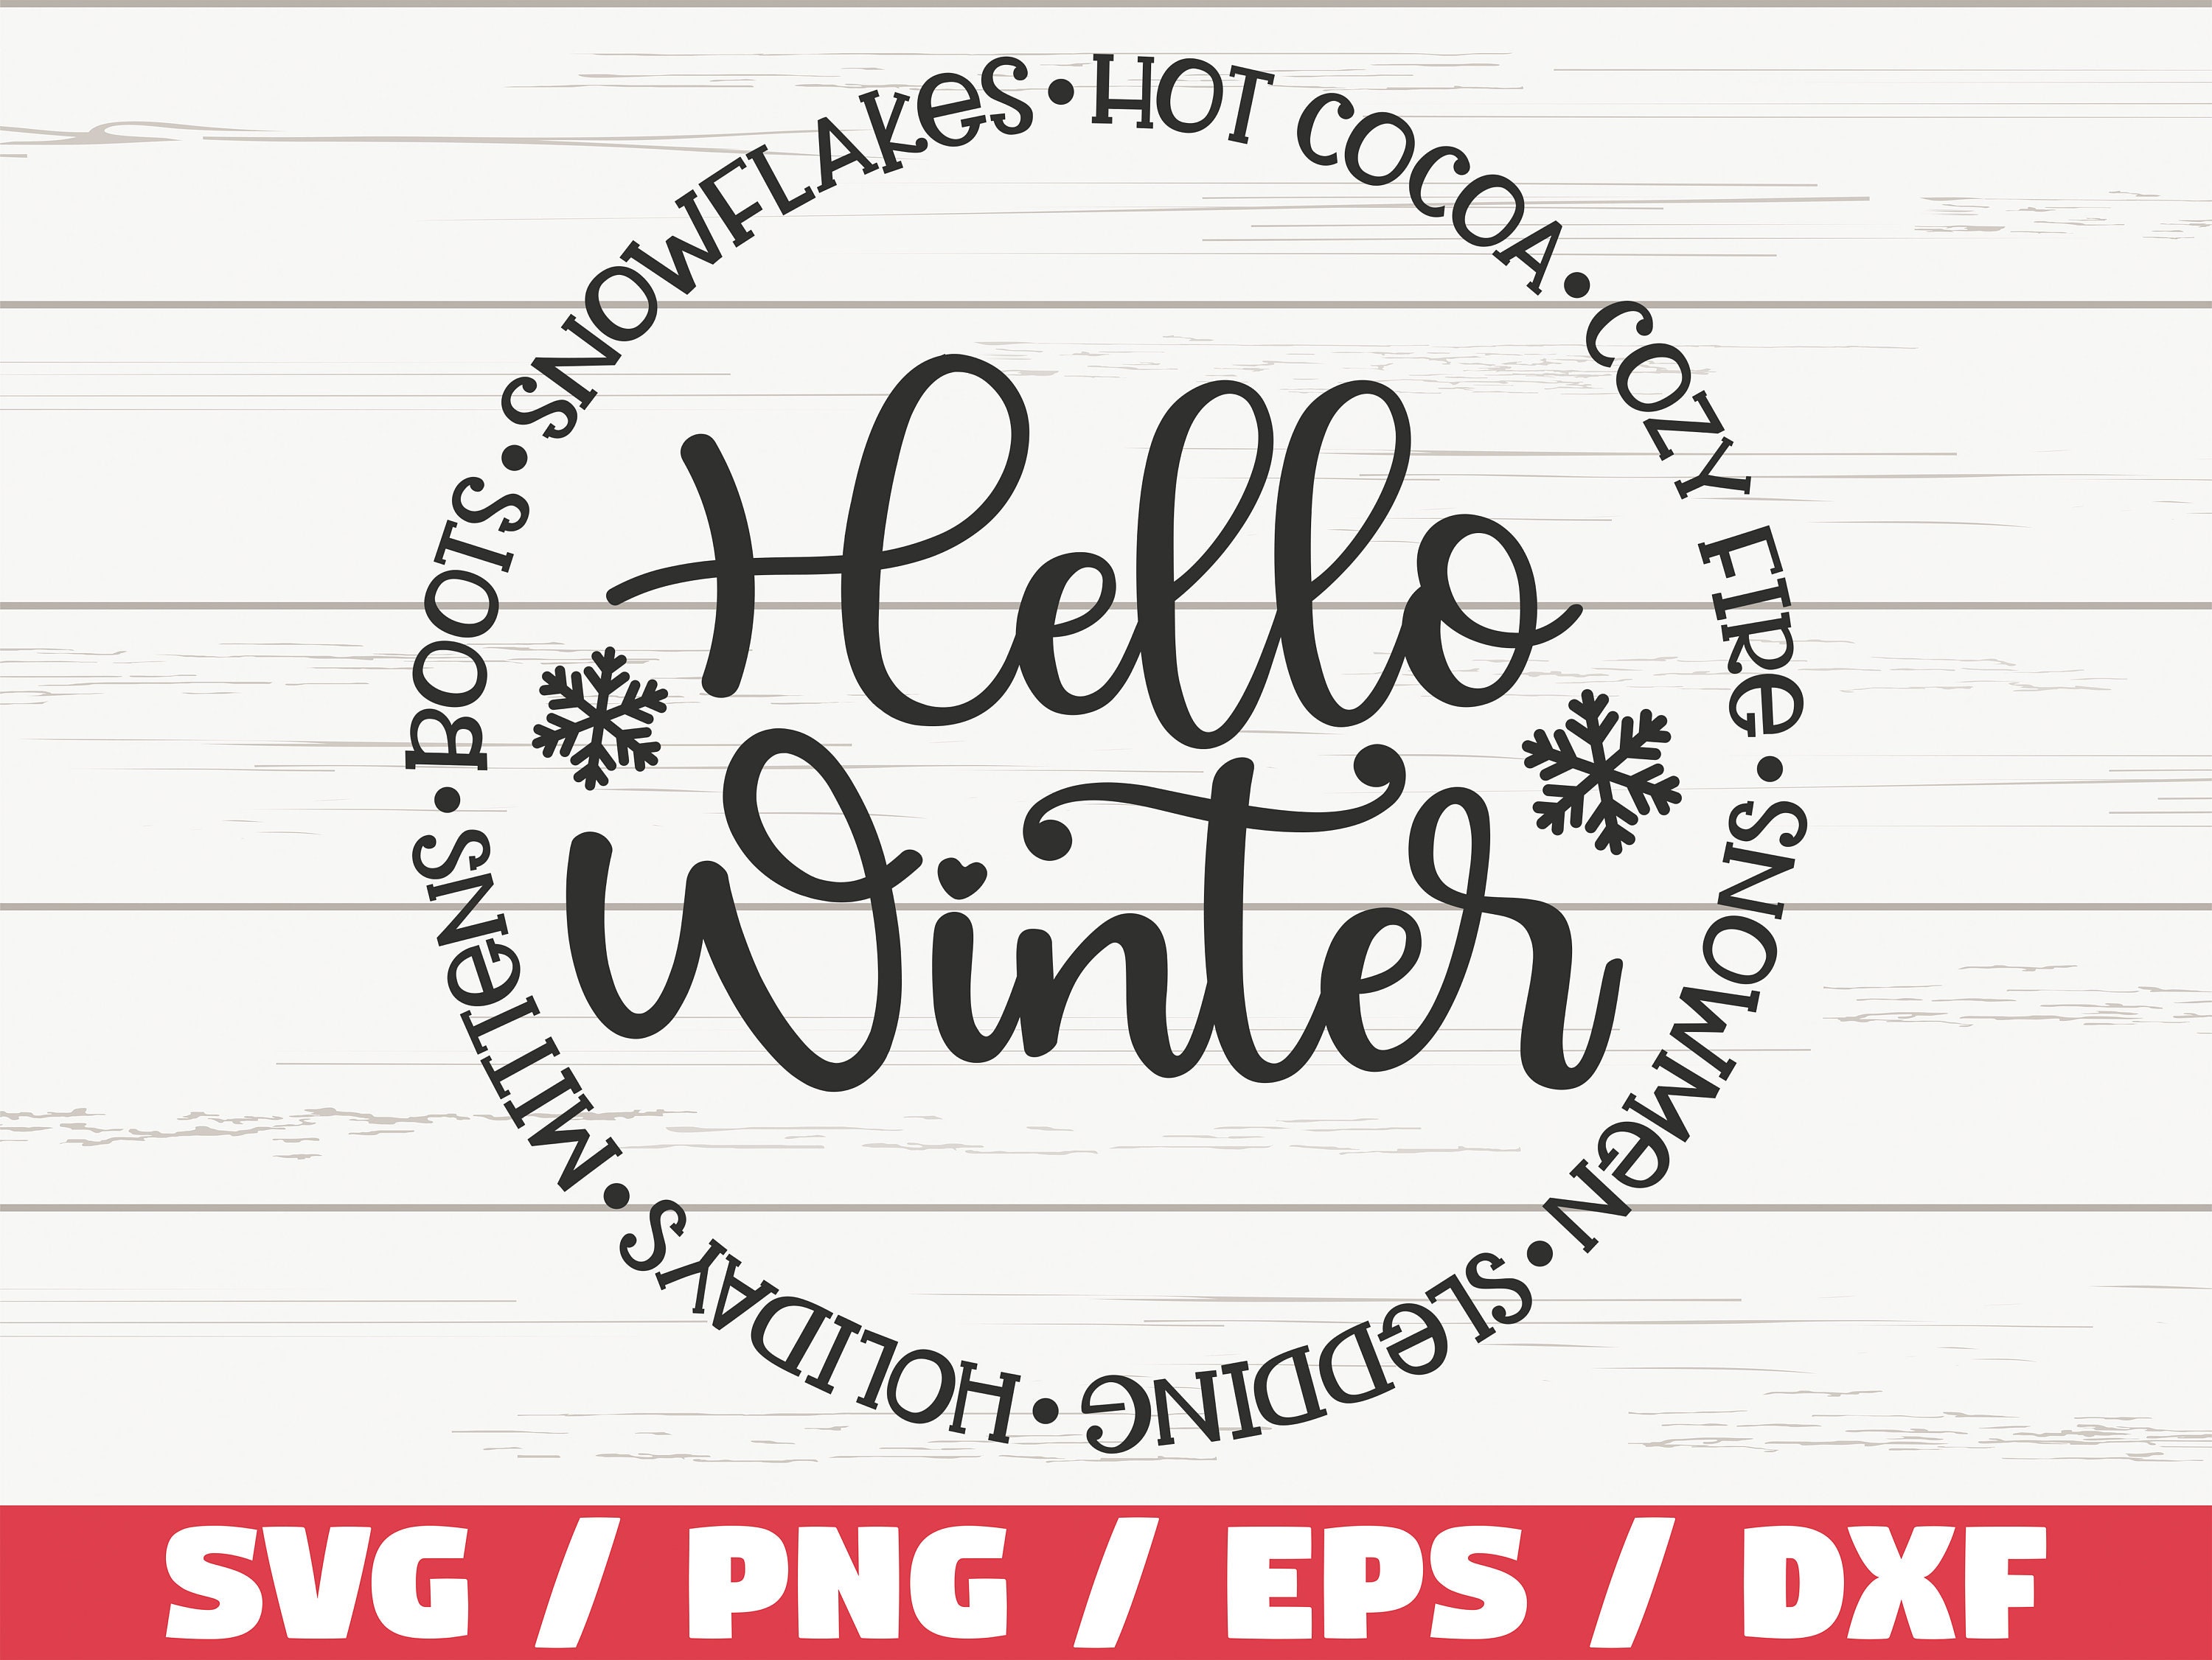 Hello Winter Vibes Sticker for Sale by swietenia